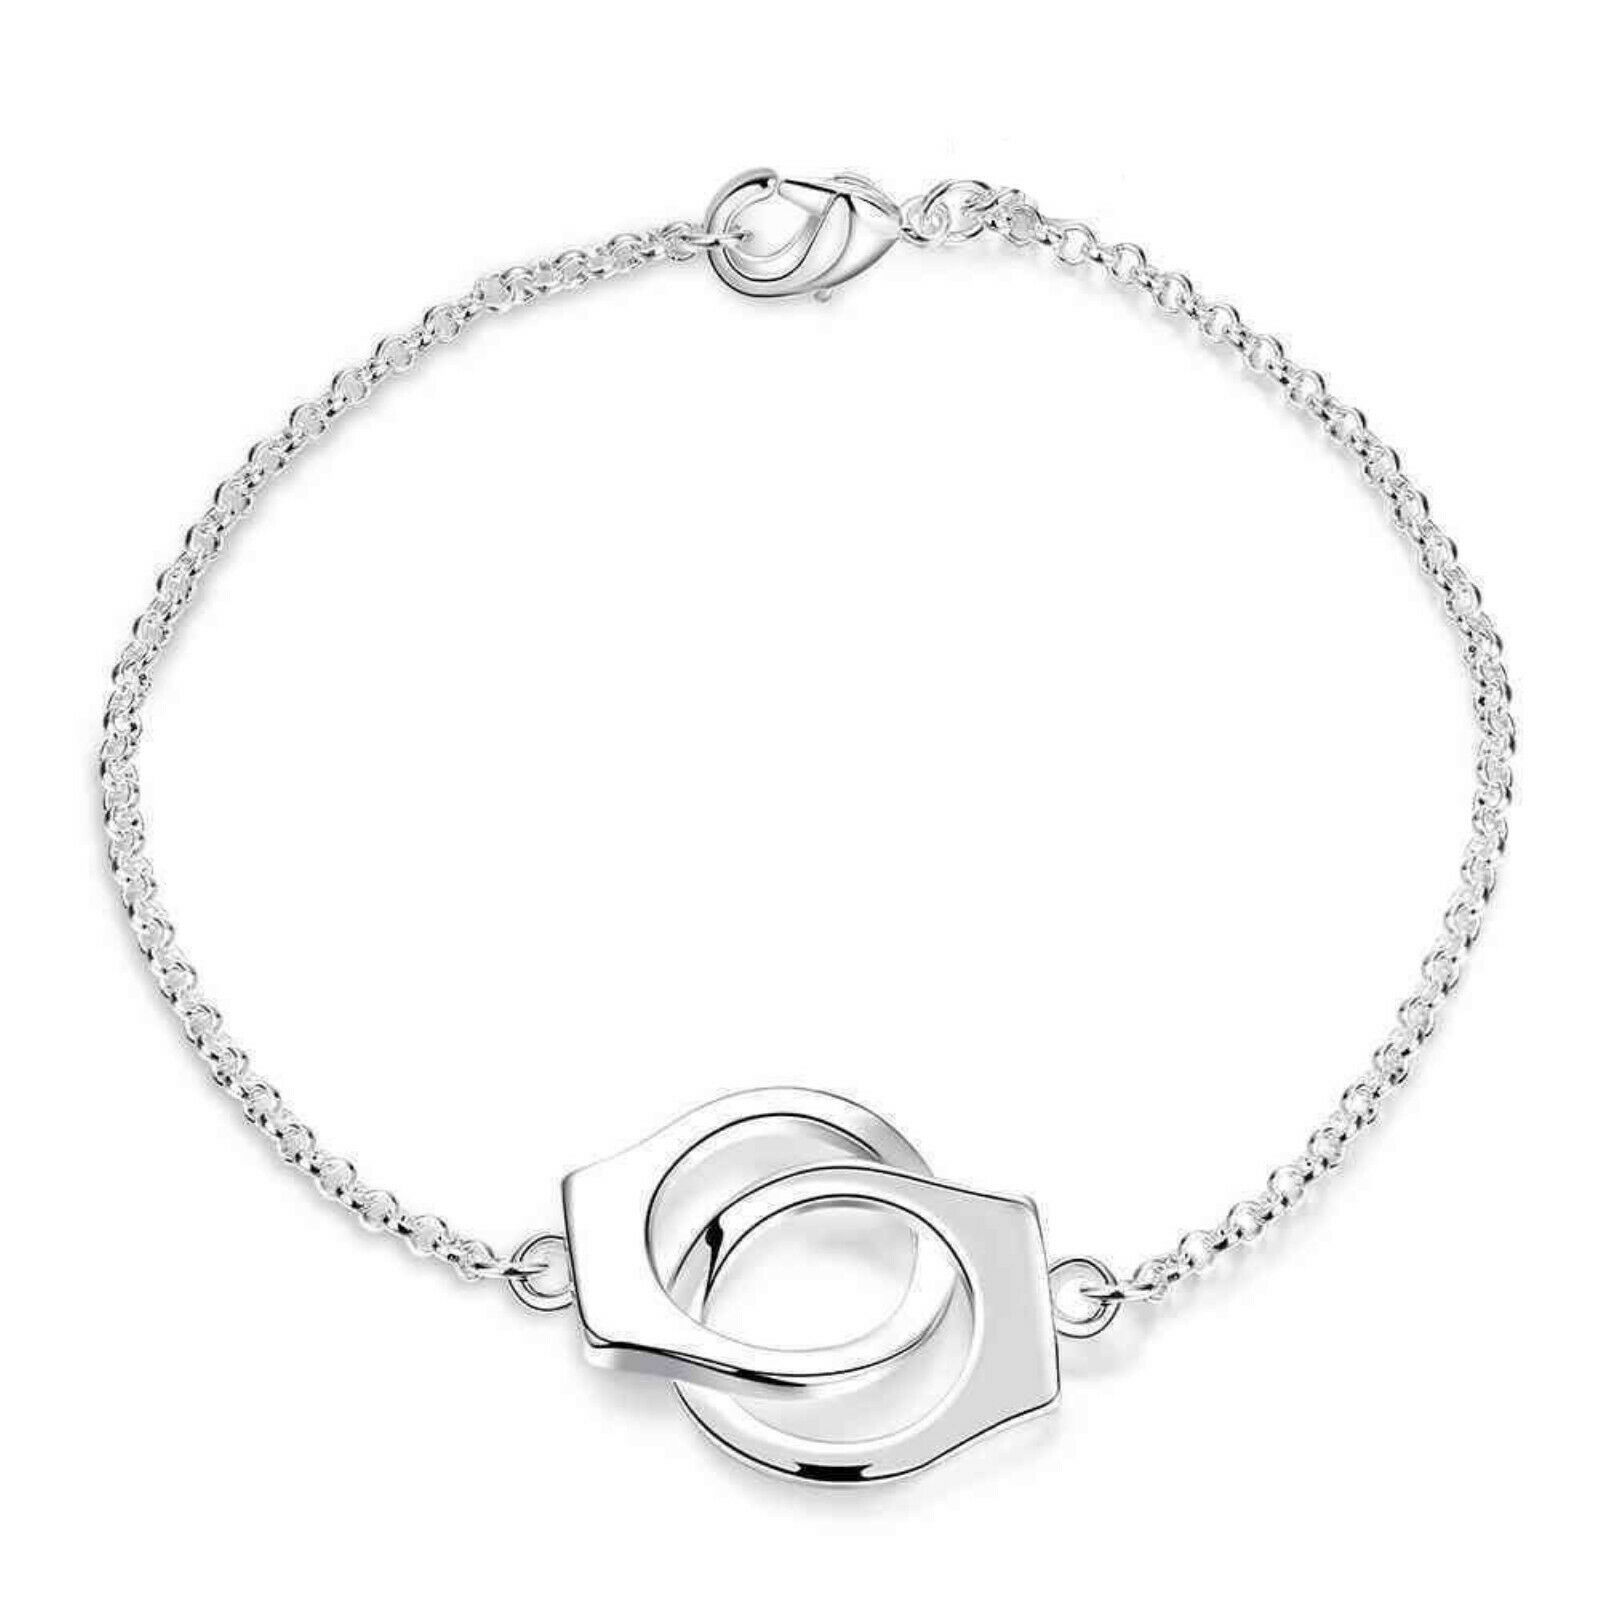 Handcuffs Chain Bracelet Sterling Silver NEW